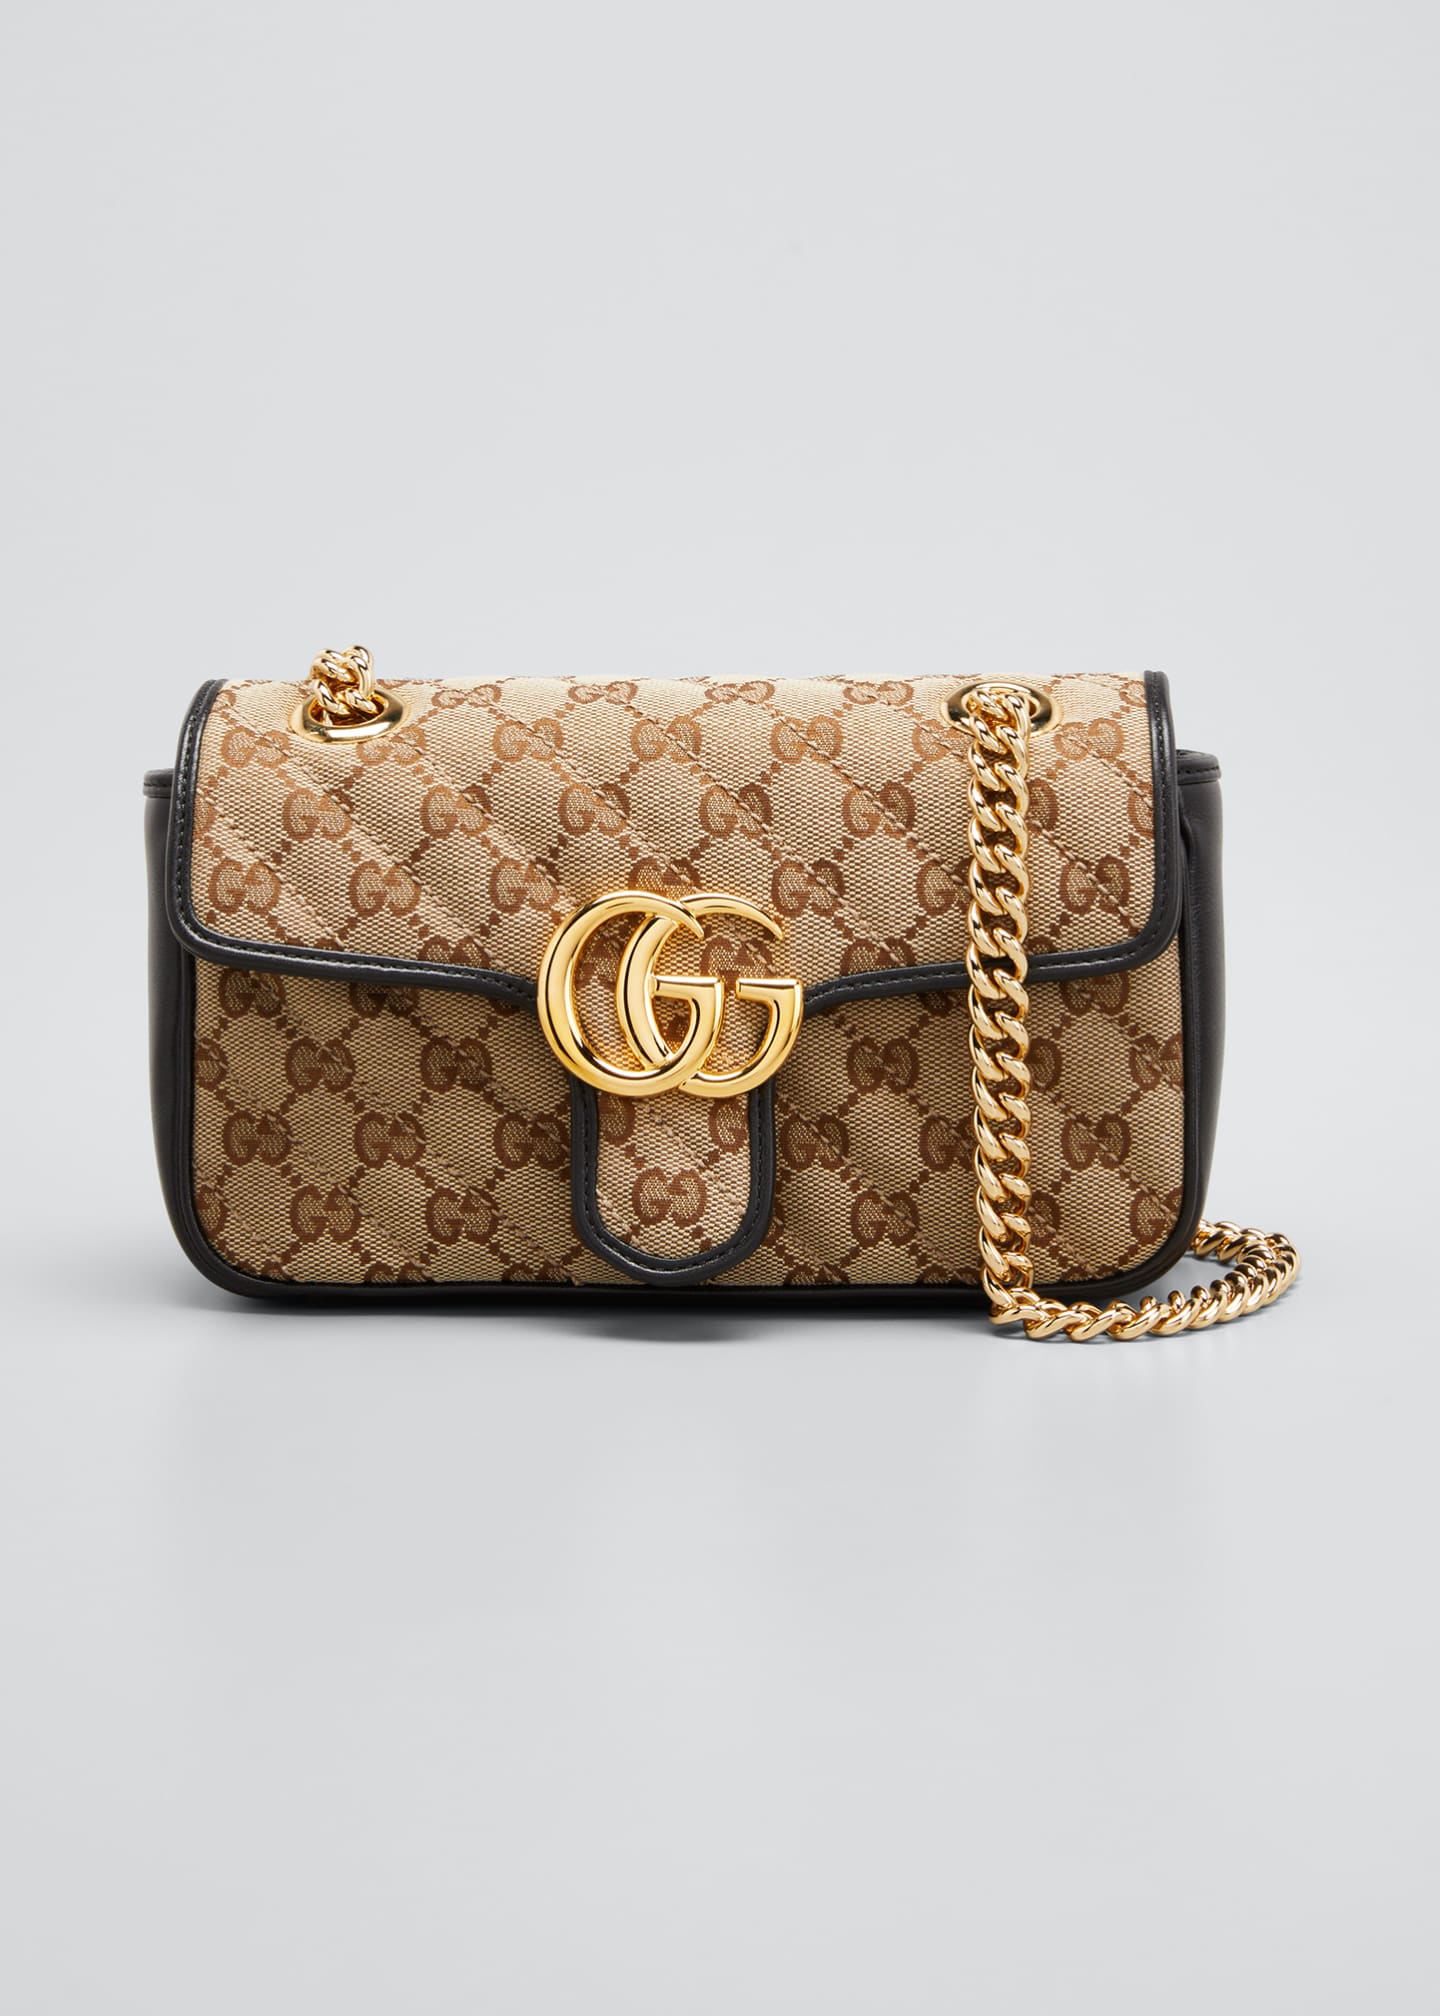 Gucci GG Marmont Medium Leather Shoulder Bag